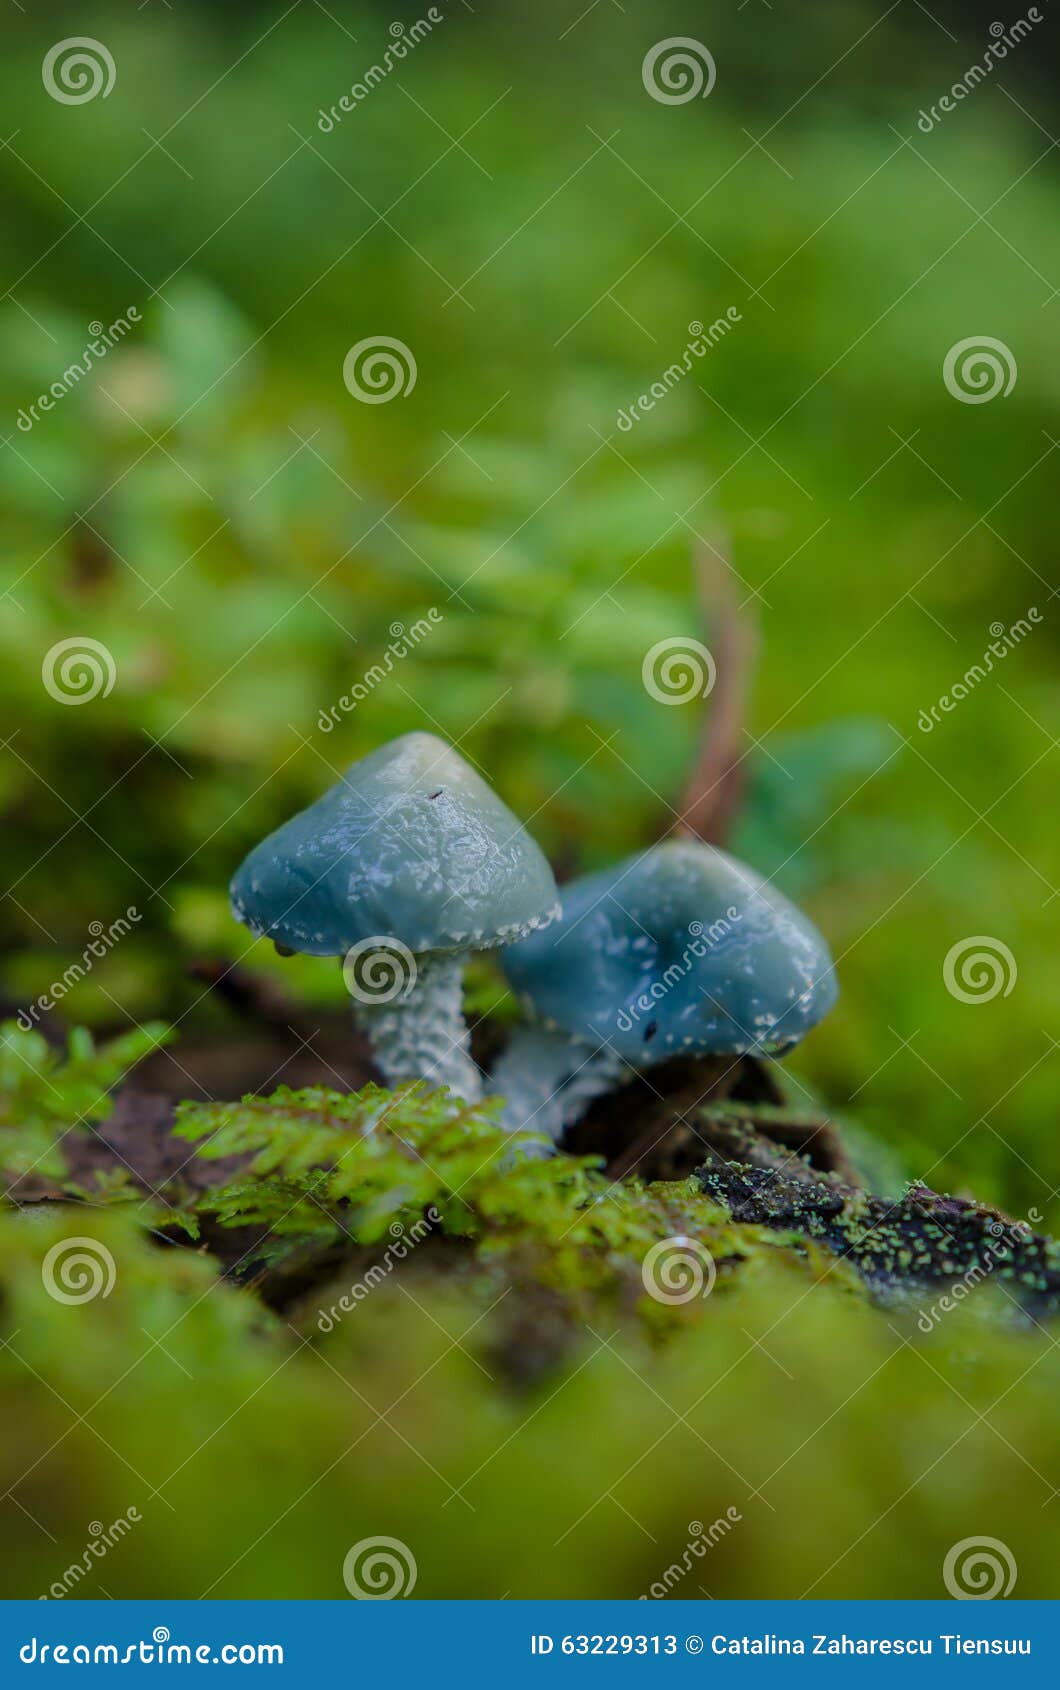 verdigris agaric in the forest